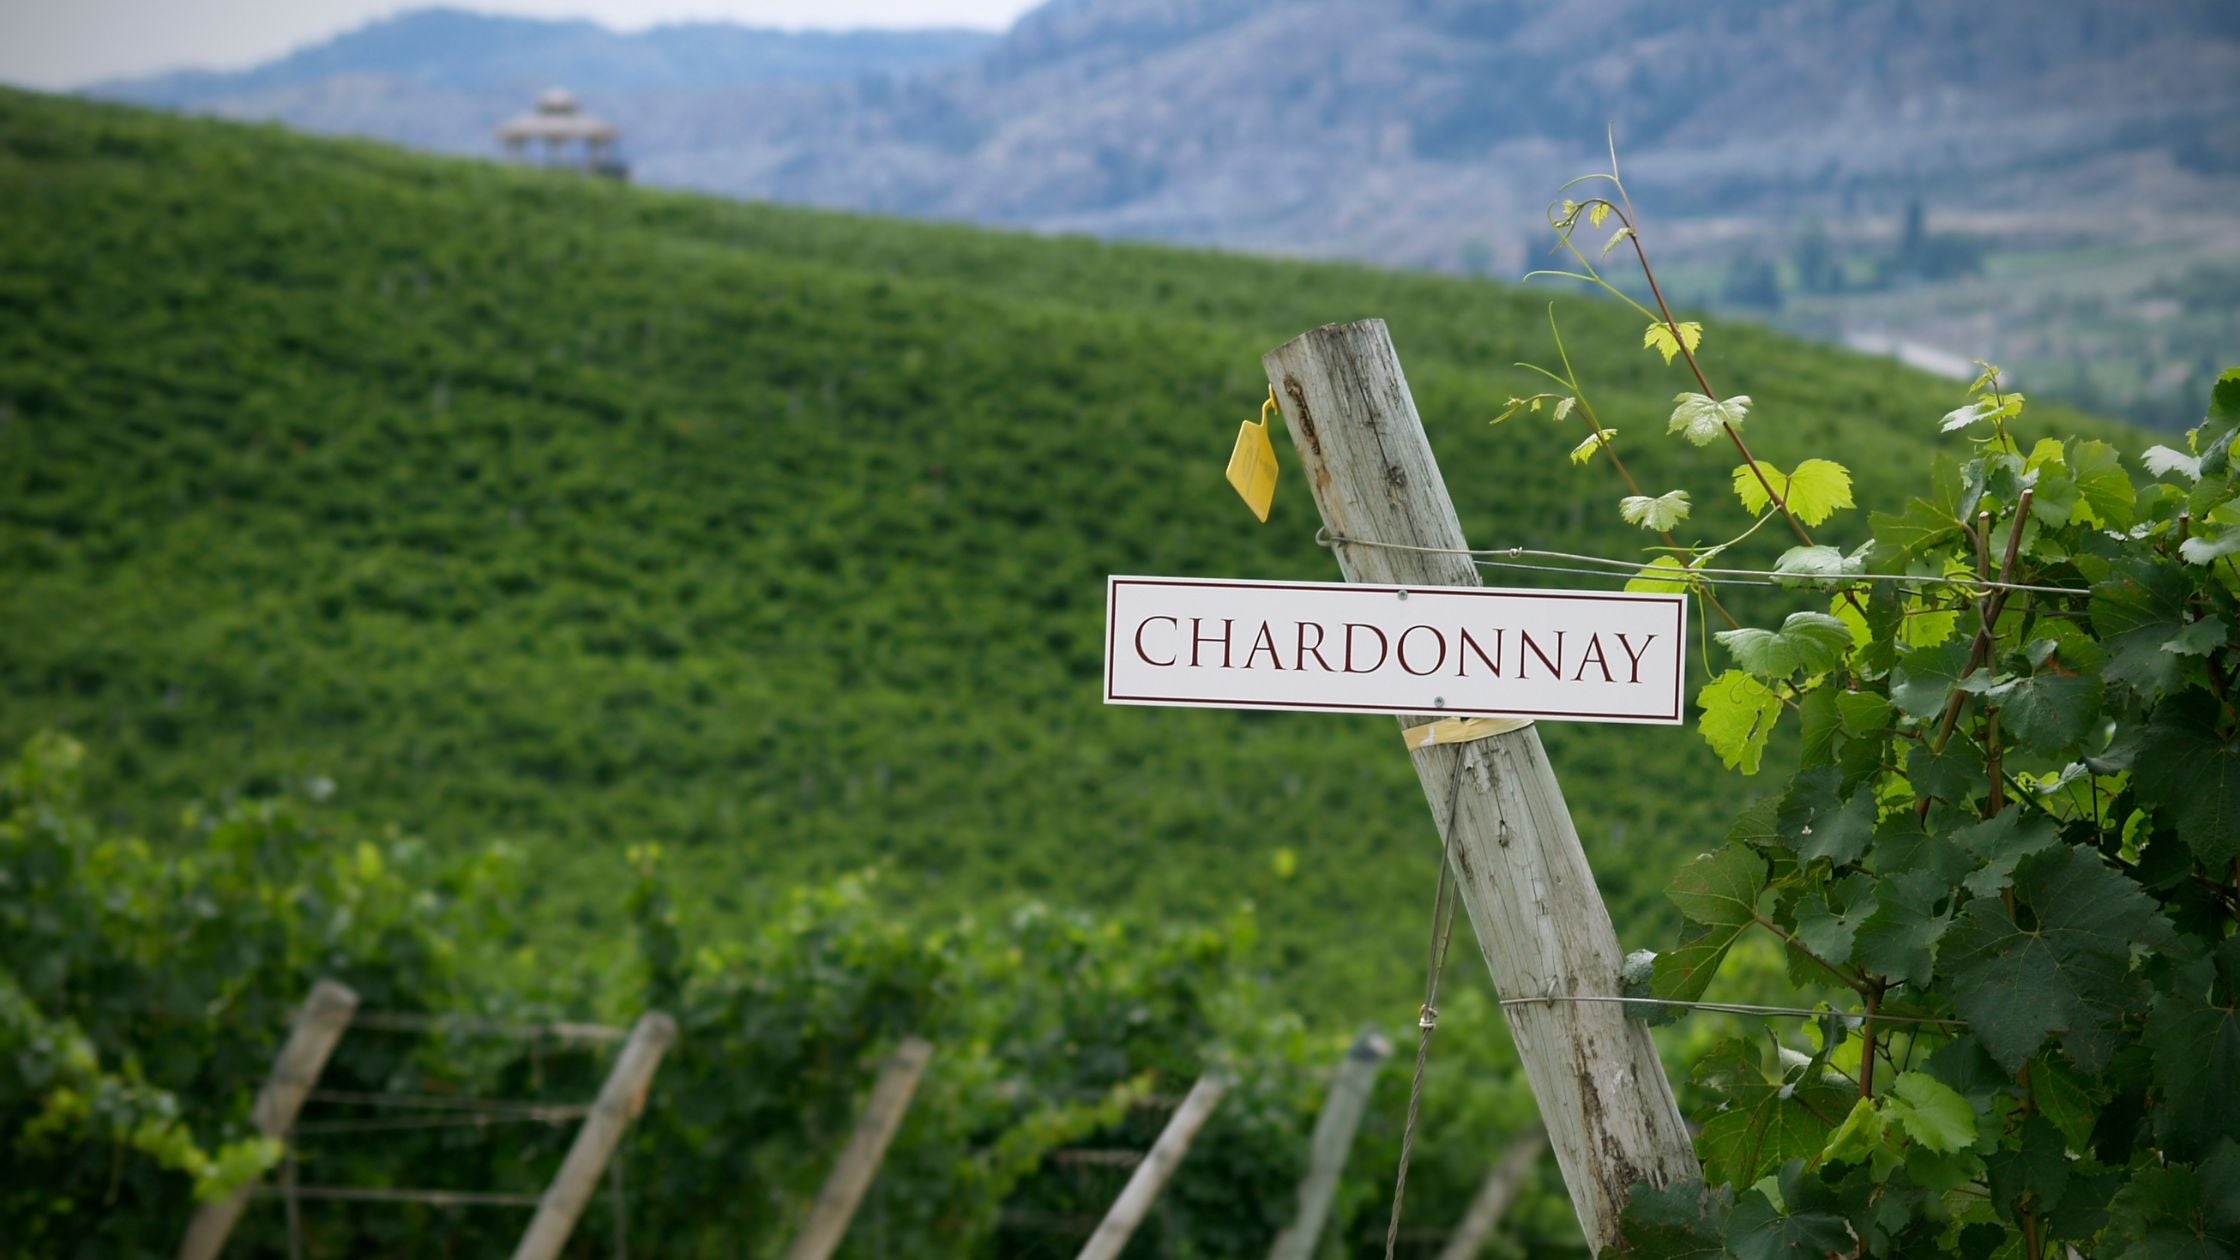 Chardonnay grape vineyard with Chardonnay sign